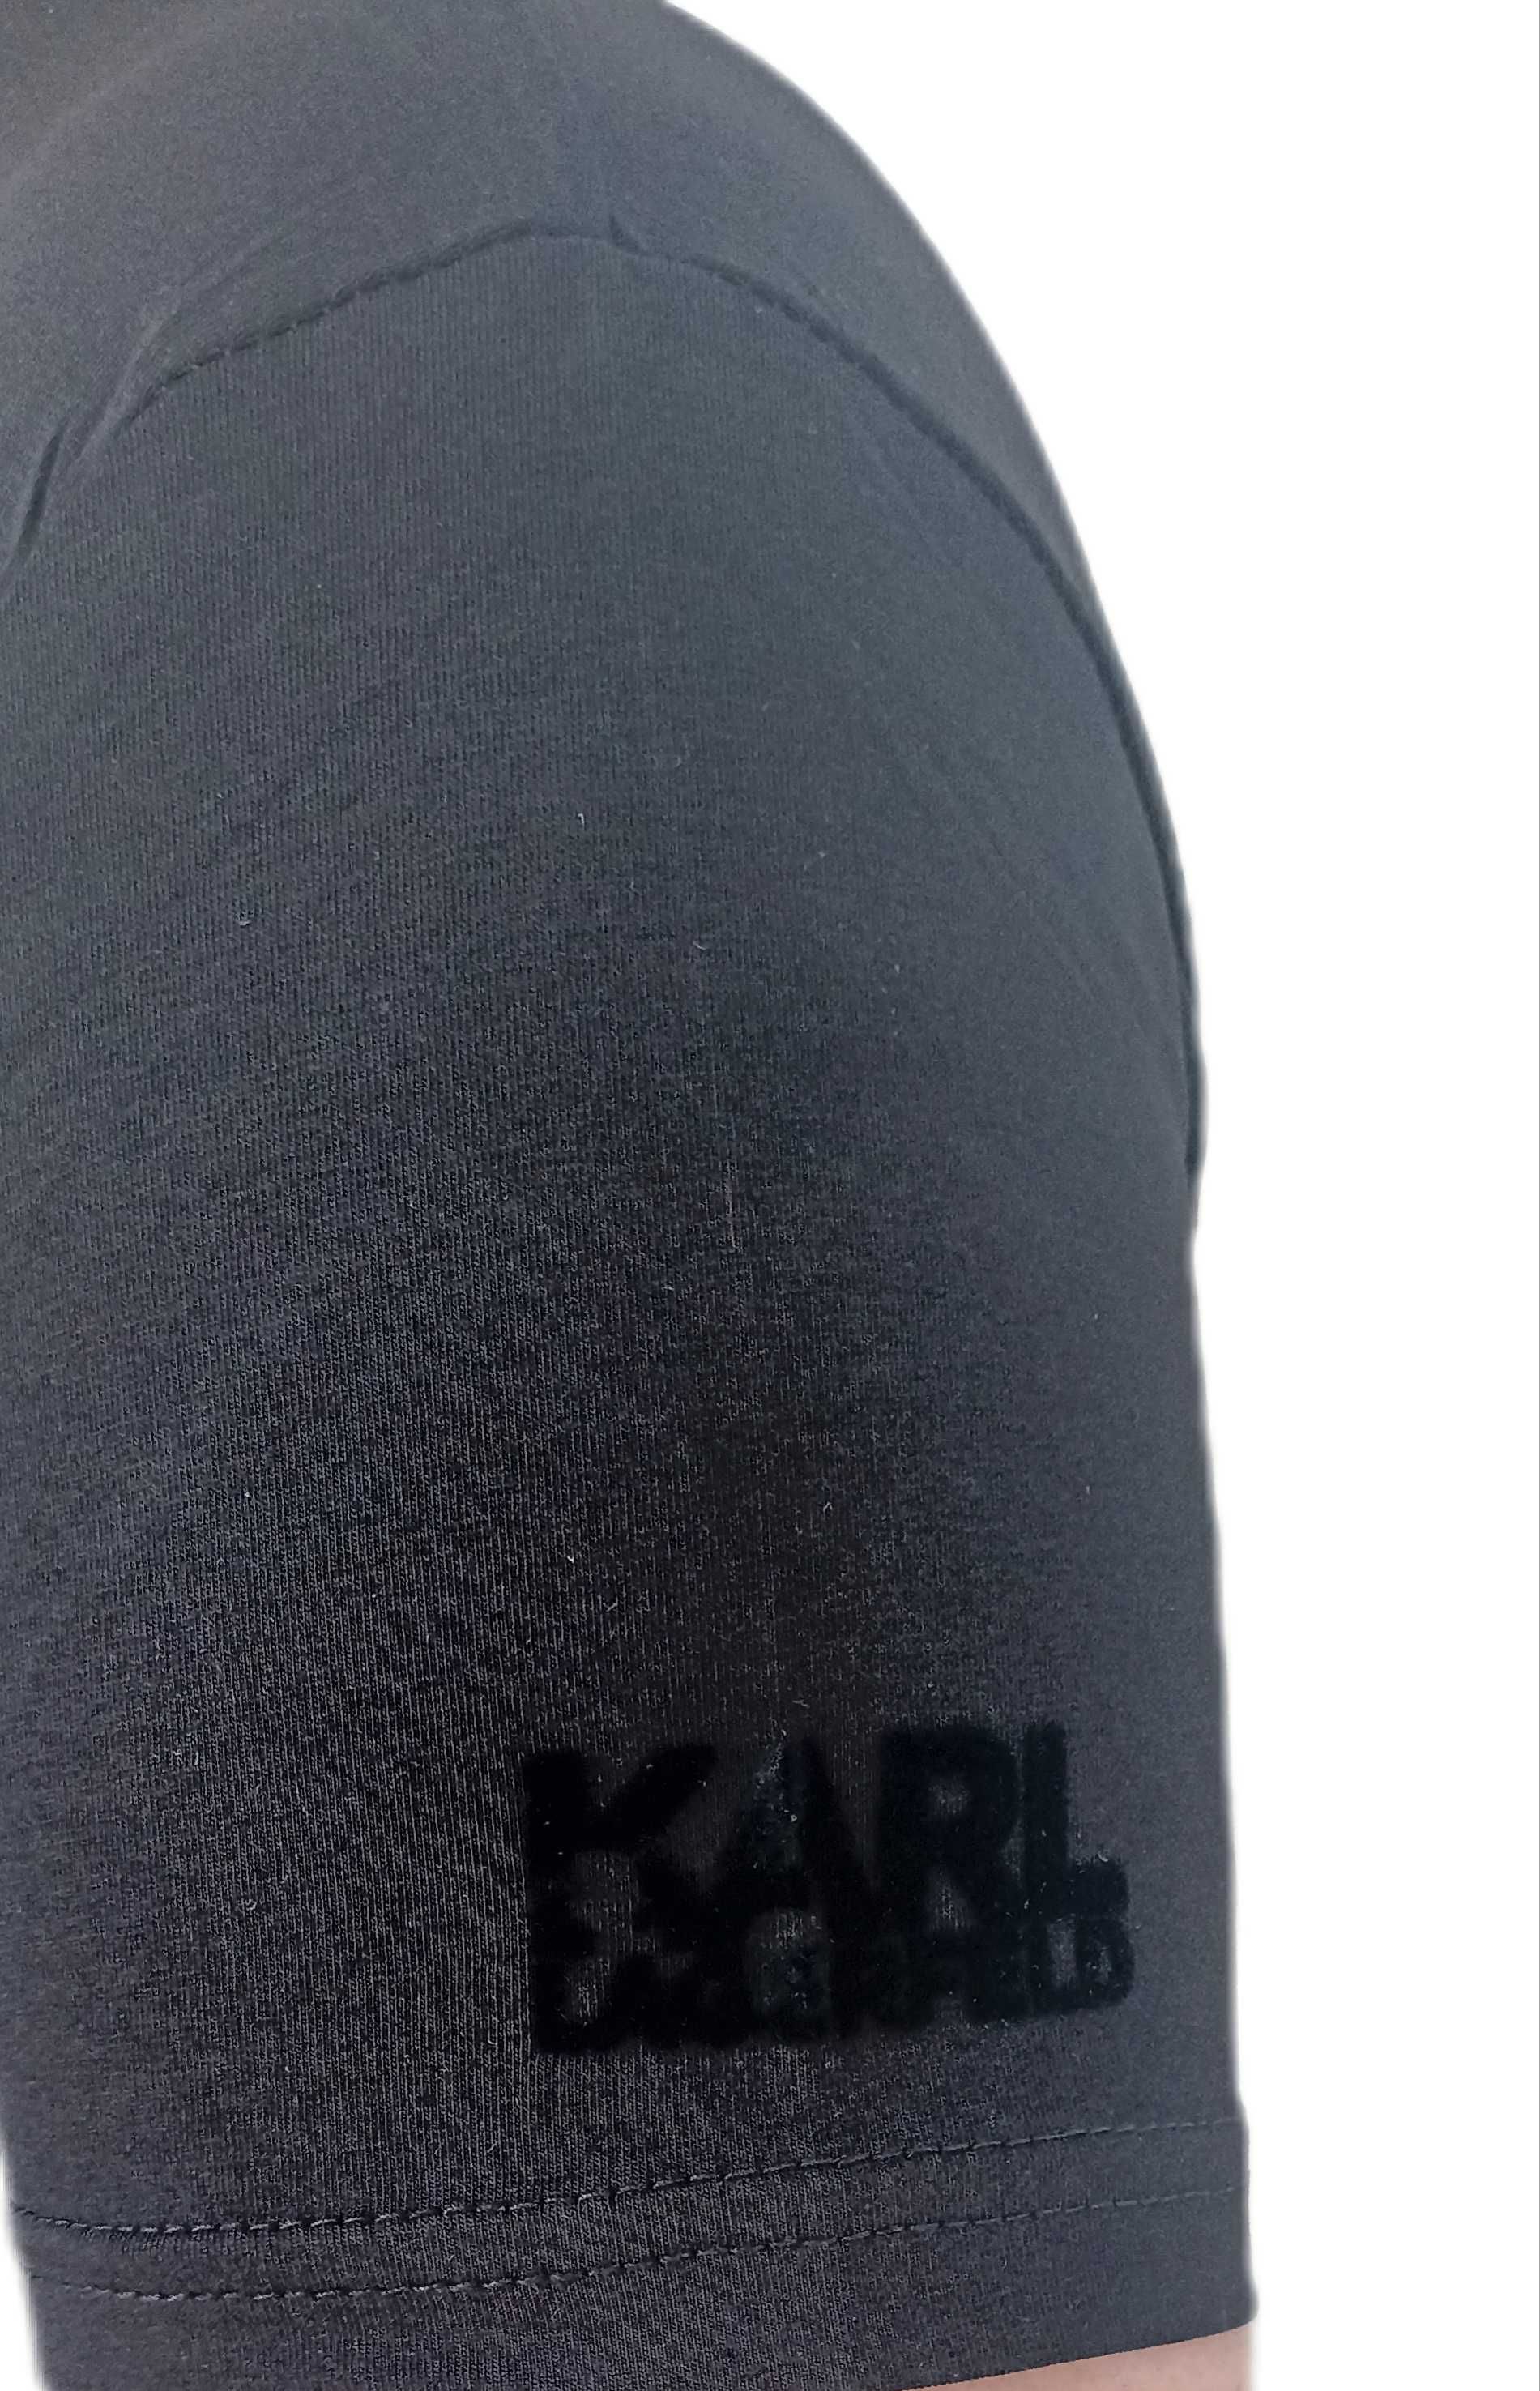 Karl Lagerfeld T-shirt koszulka czarna r.S